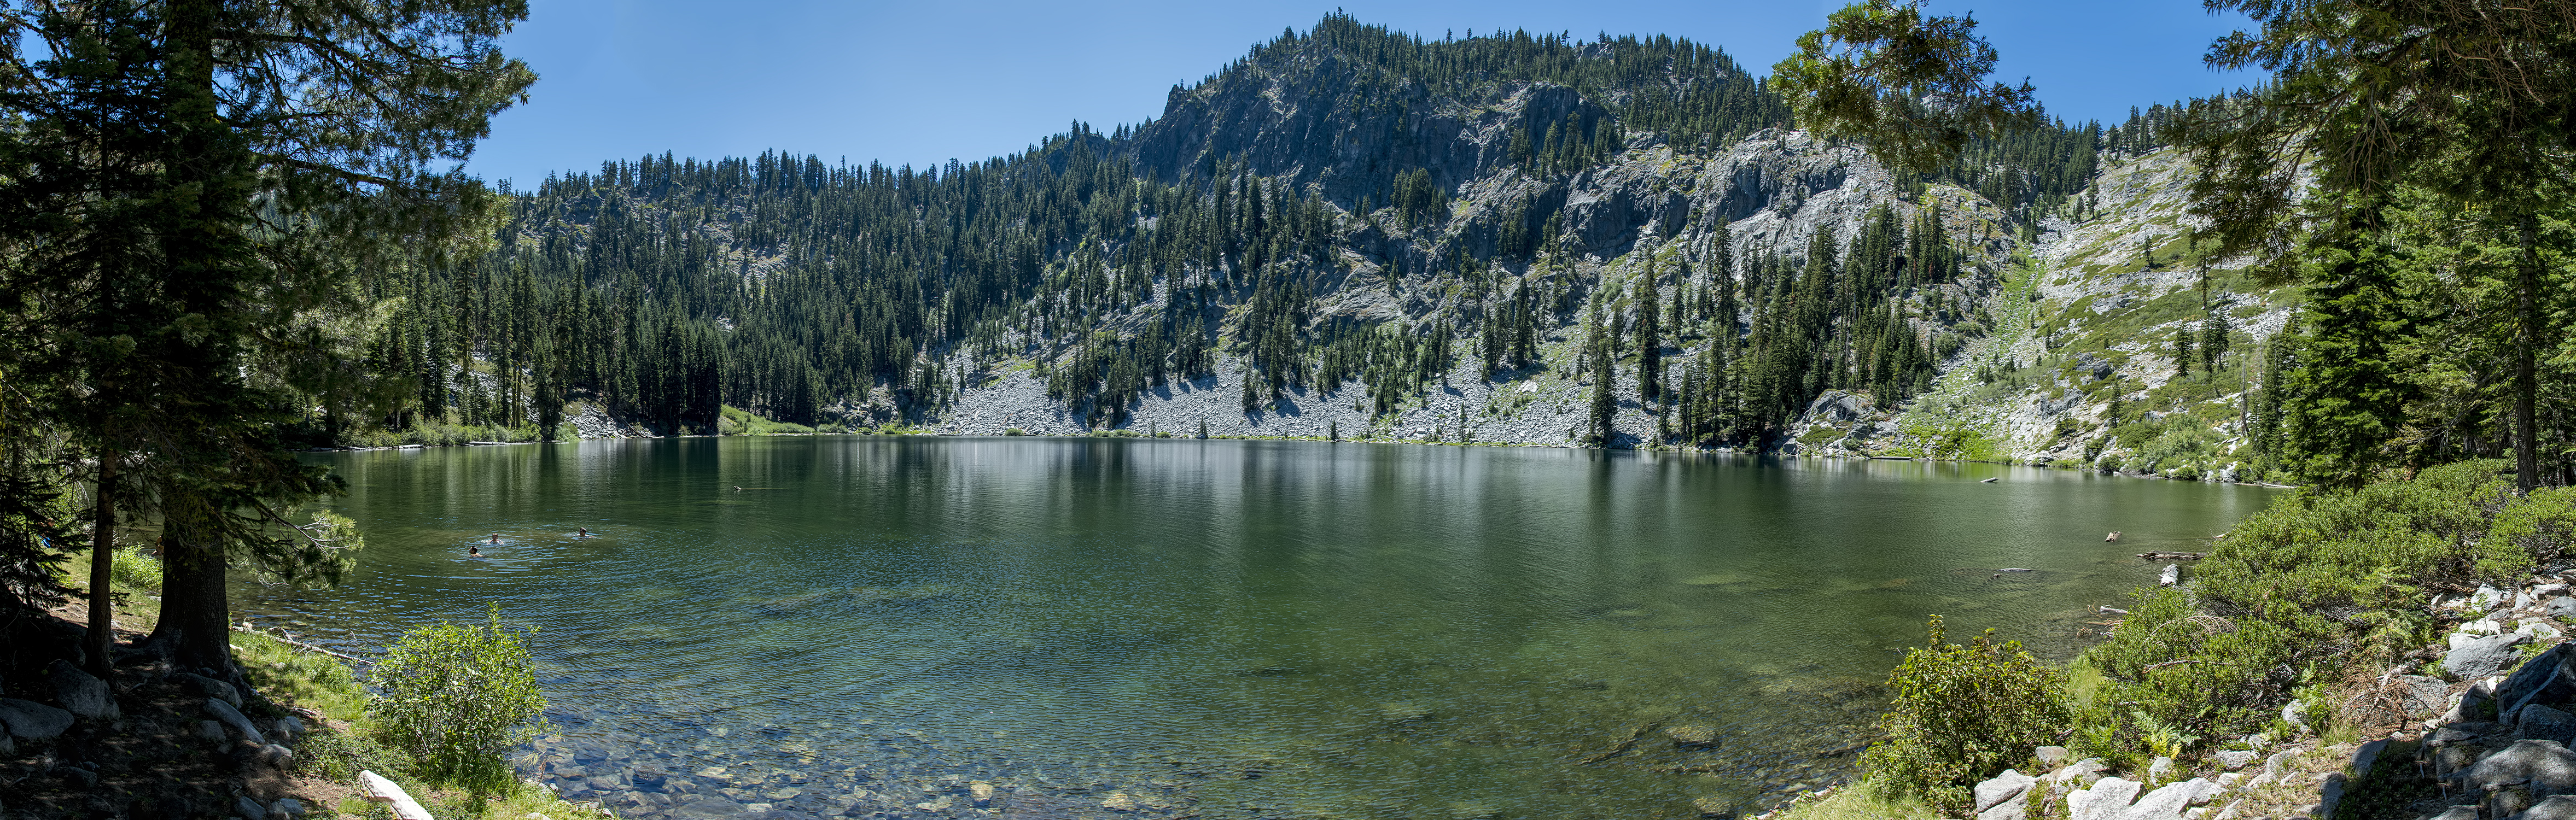 11 photo photomerge trail gulch lake california